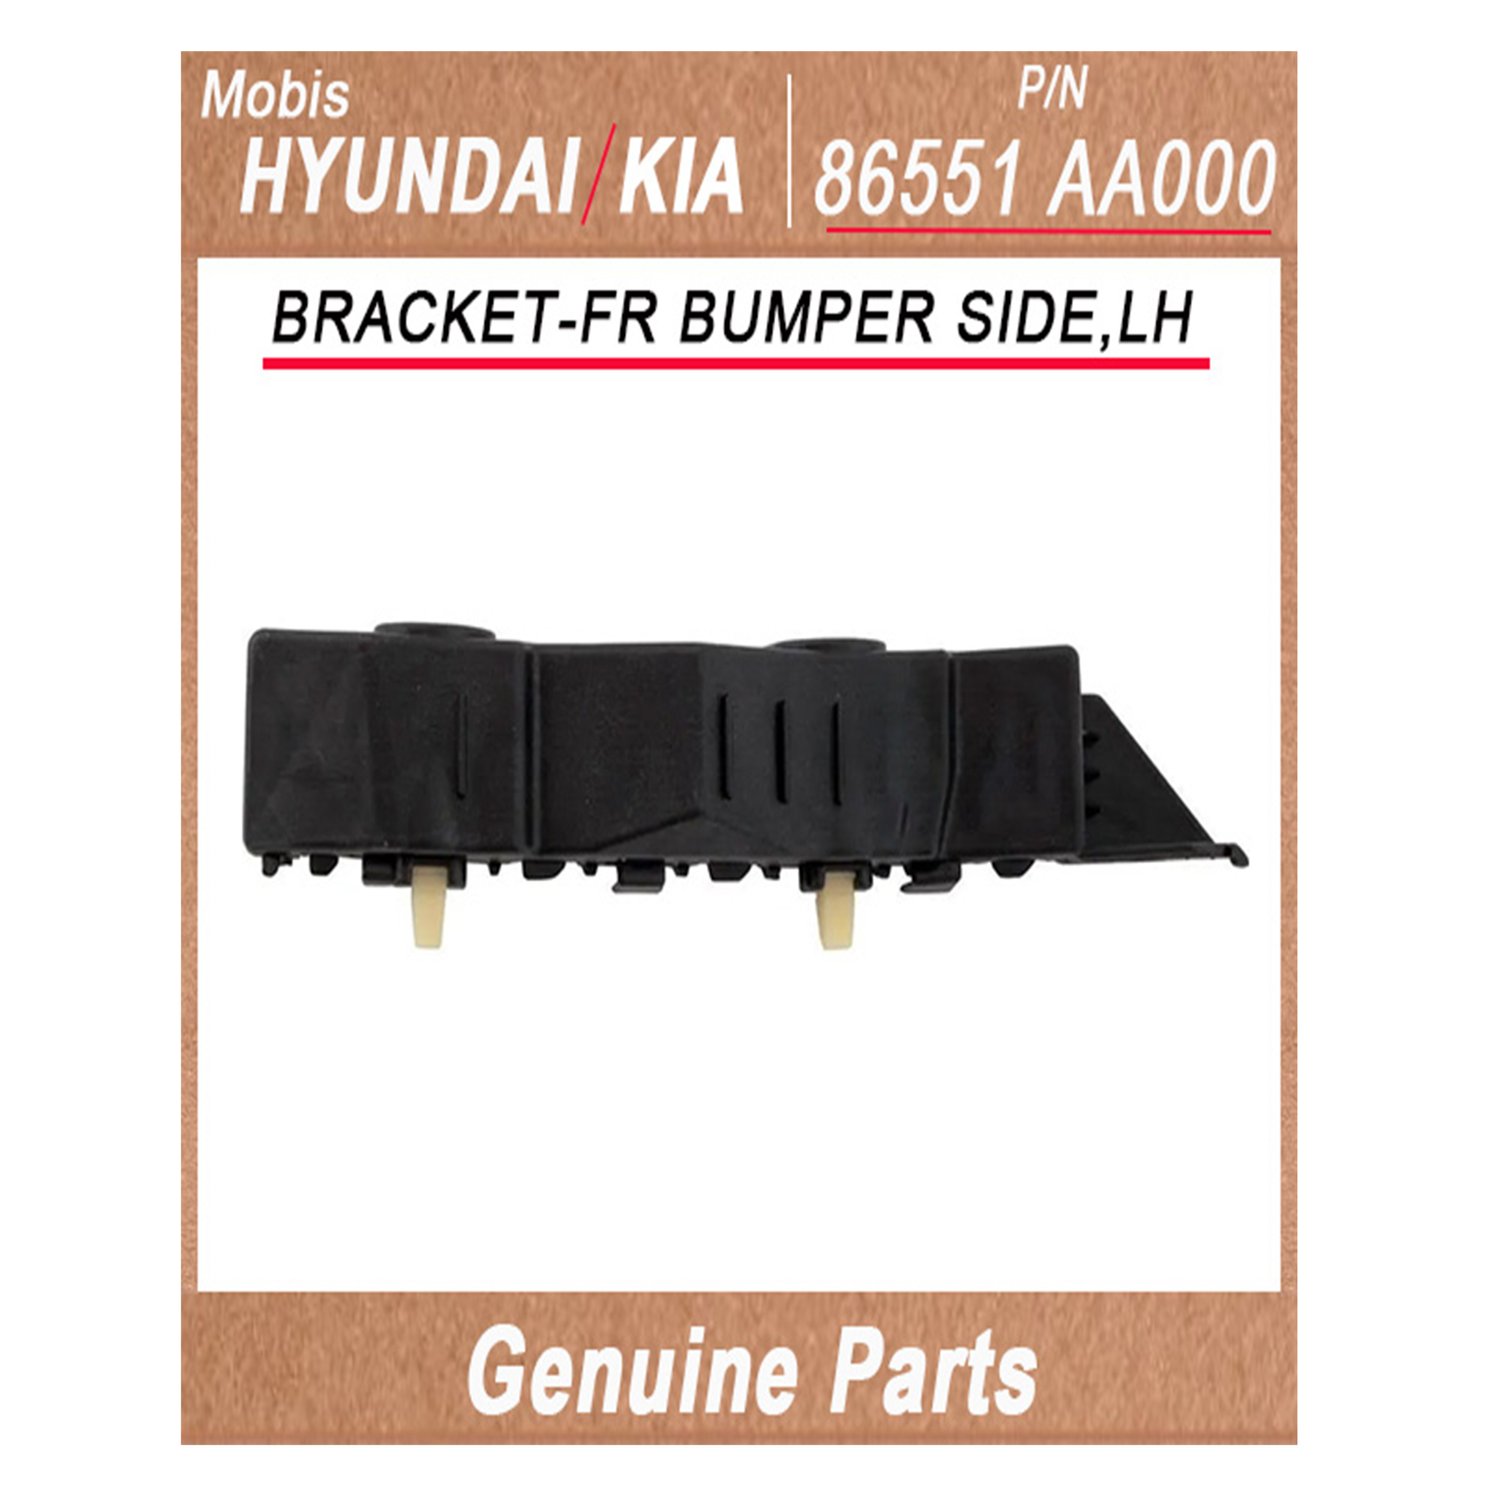 86551AA000 _ BRACKET_FR BUMPER SIDE_LH _ Genuine Korean Automotive Spare Parts _ Hyundai Kia _Mobis_